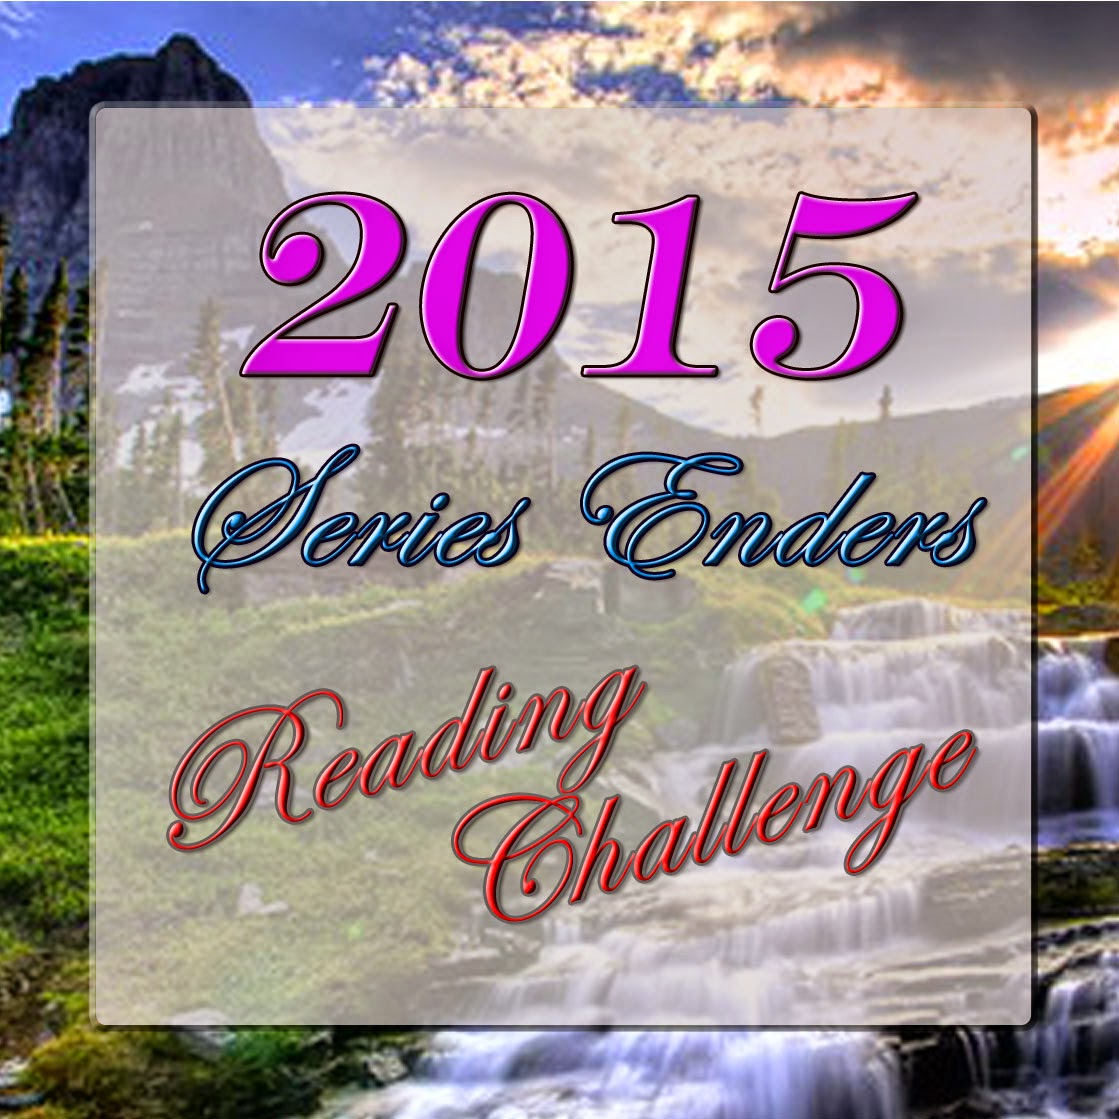 2015 Series Ender Challenge